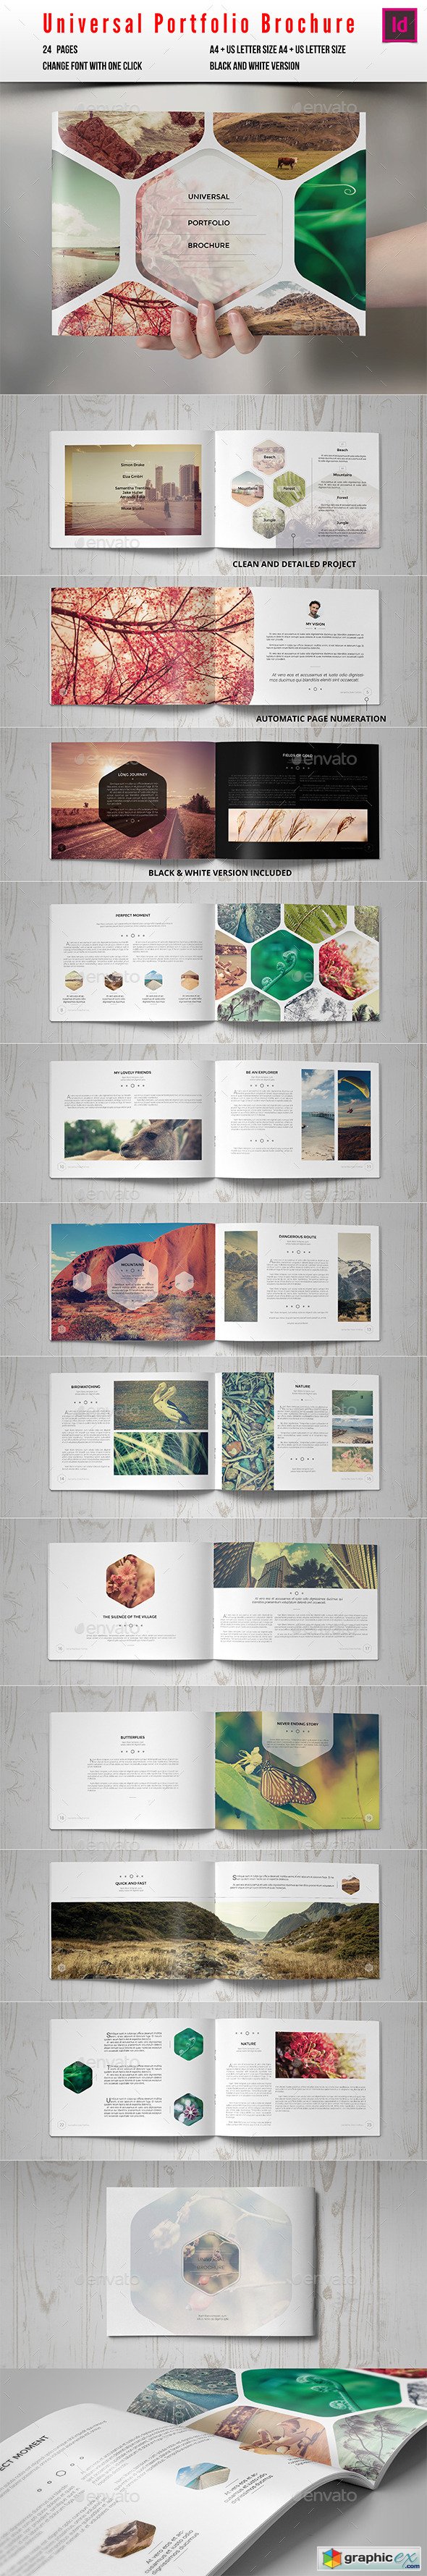 Universal Portfolio Brochure / Catalog